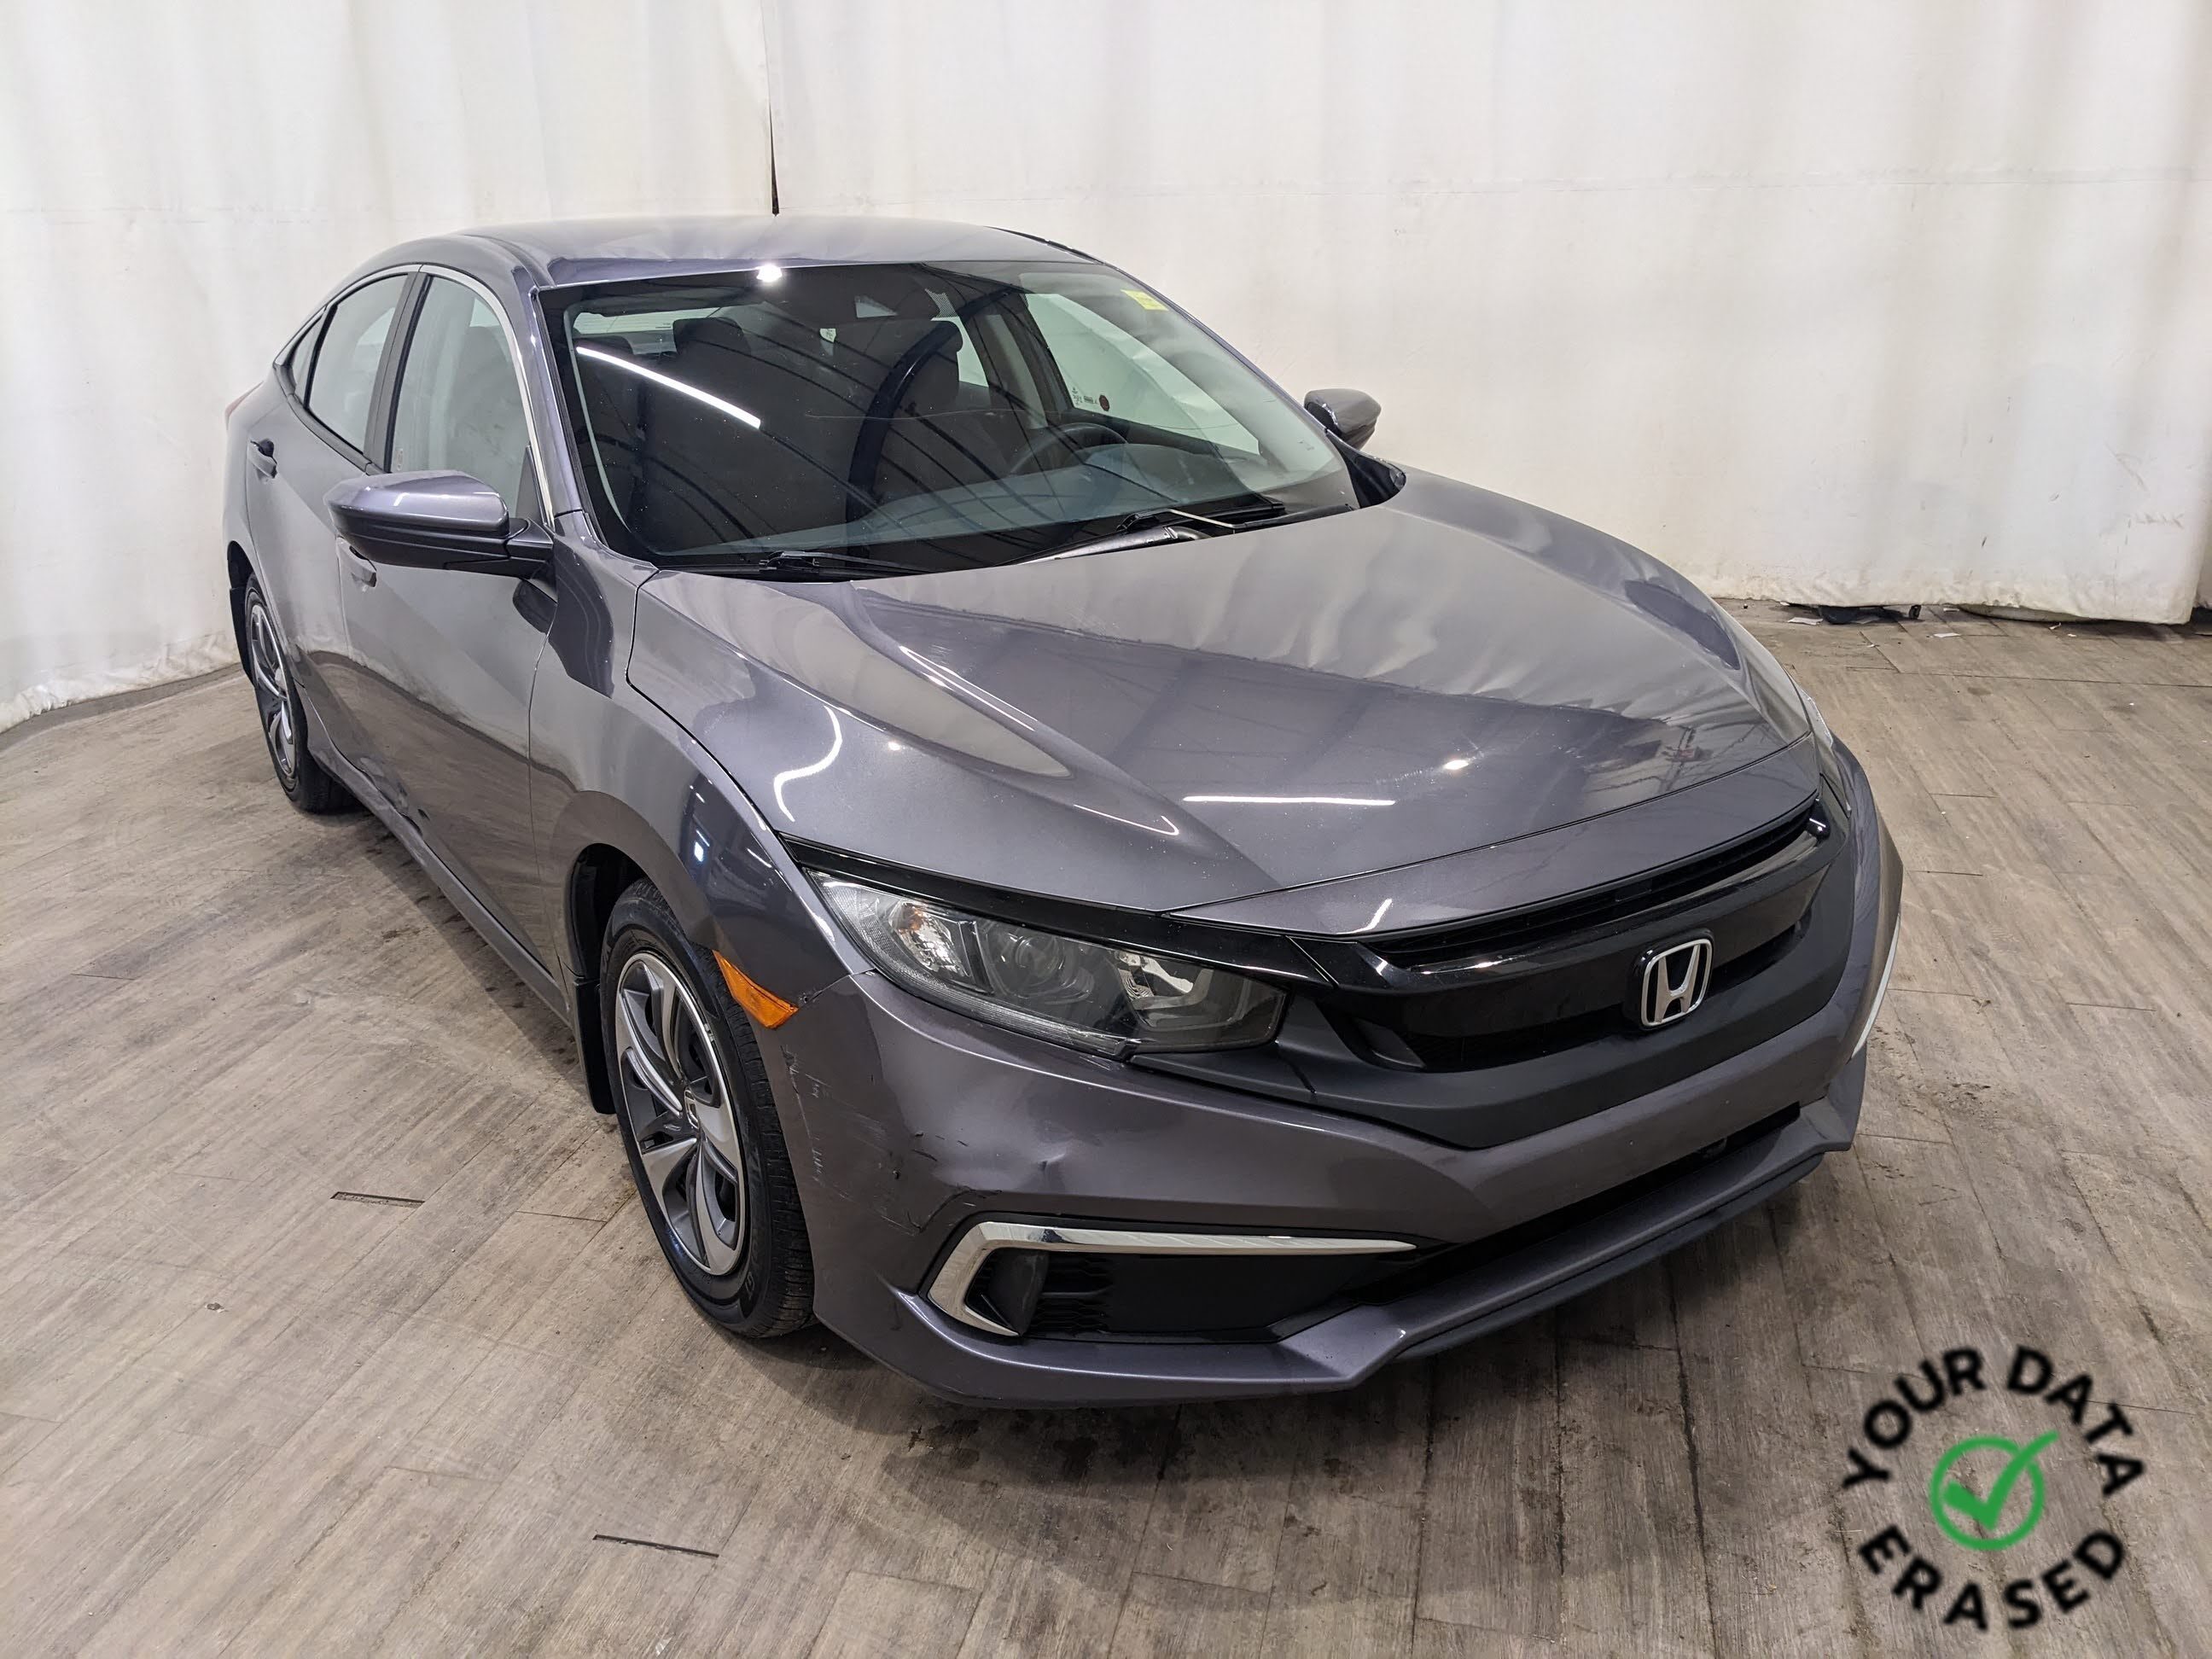 2020 Honda Civic Sedan LX Manual Transmission | No Accidents | Bluetooth